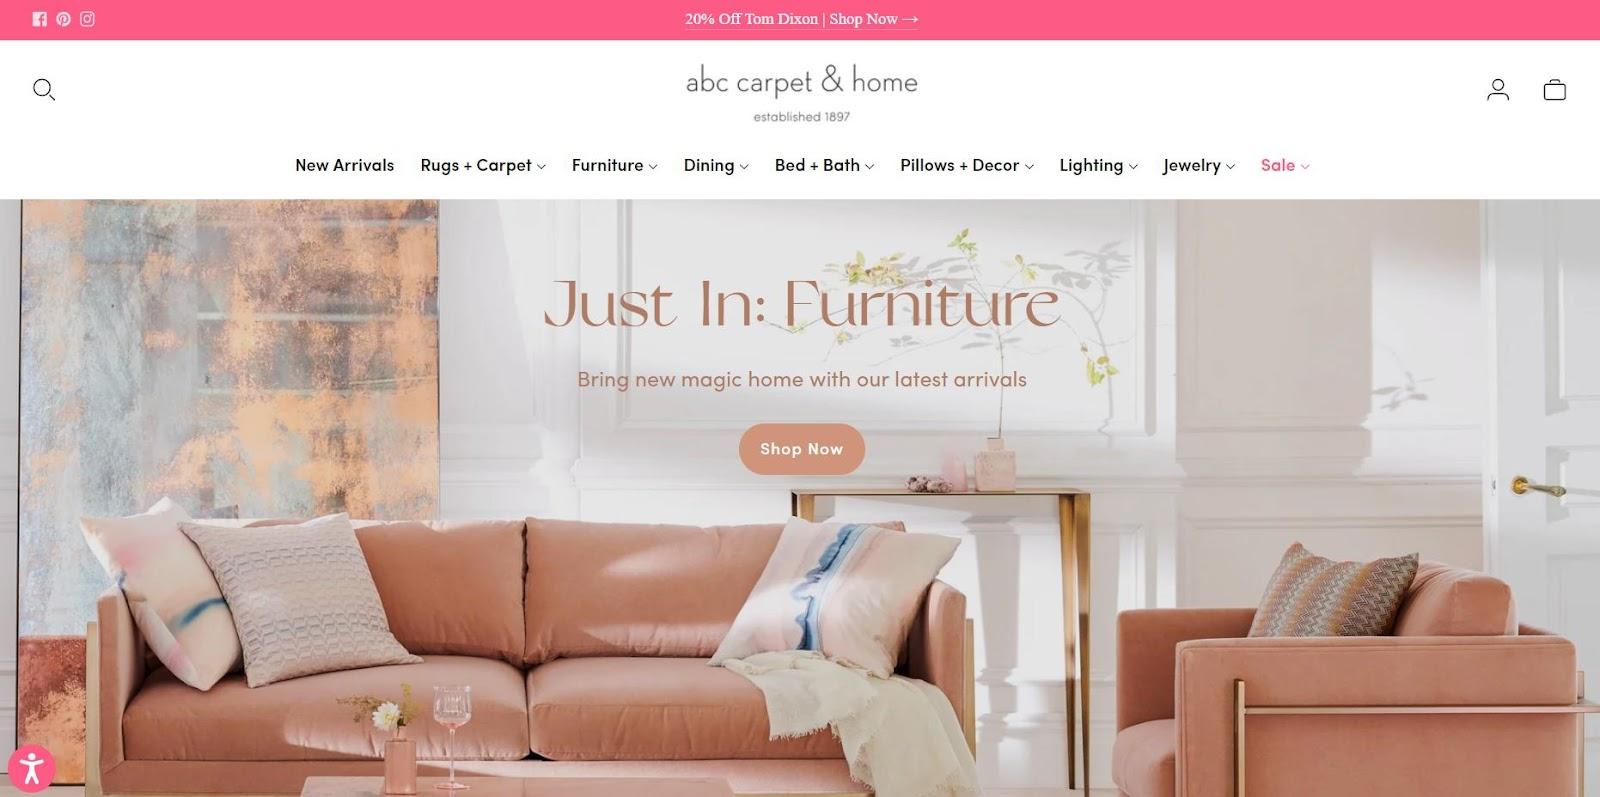 abc carpet & home best websites for furniture